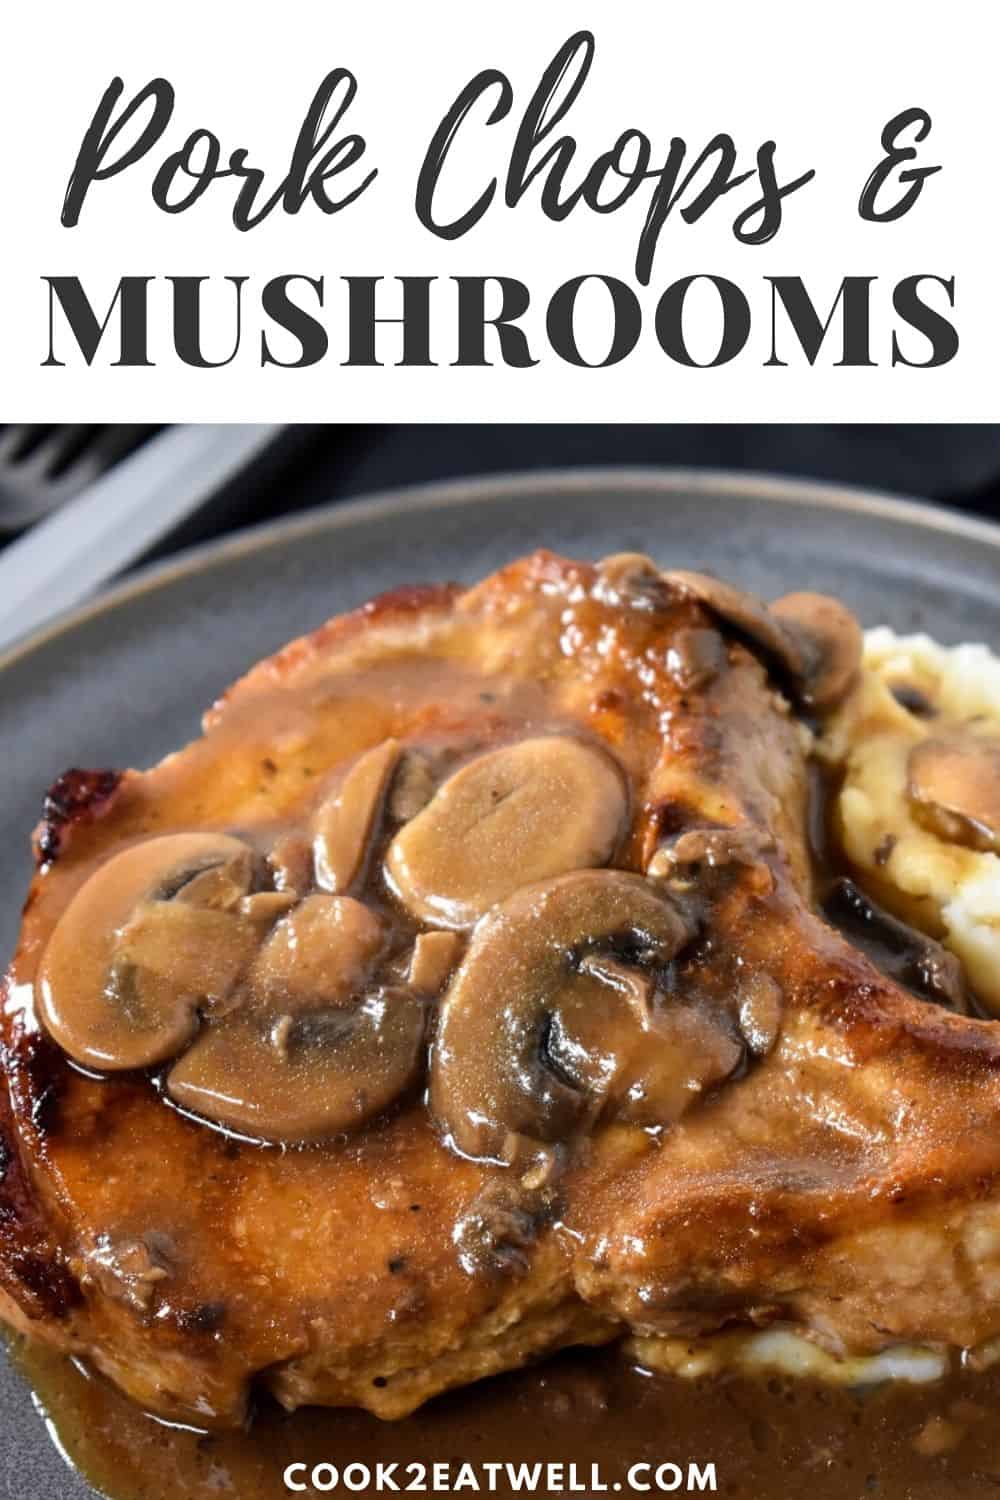 Mushroom Pork Chops - Cook2eatwell